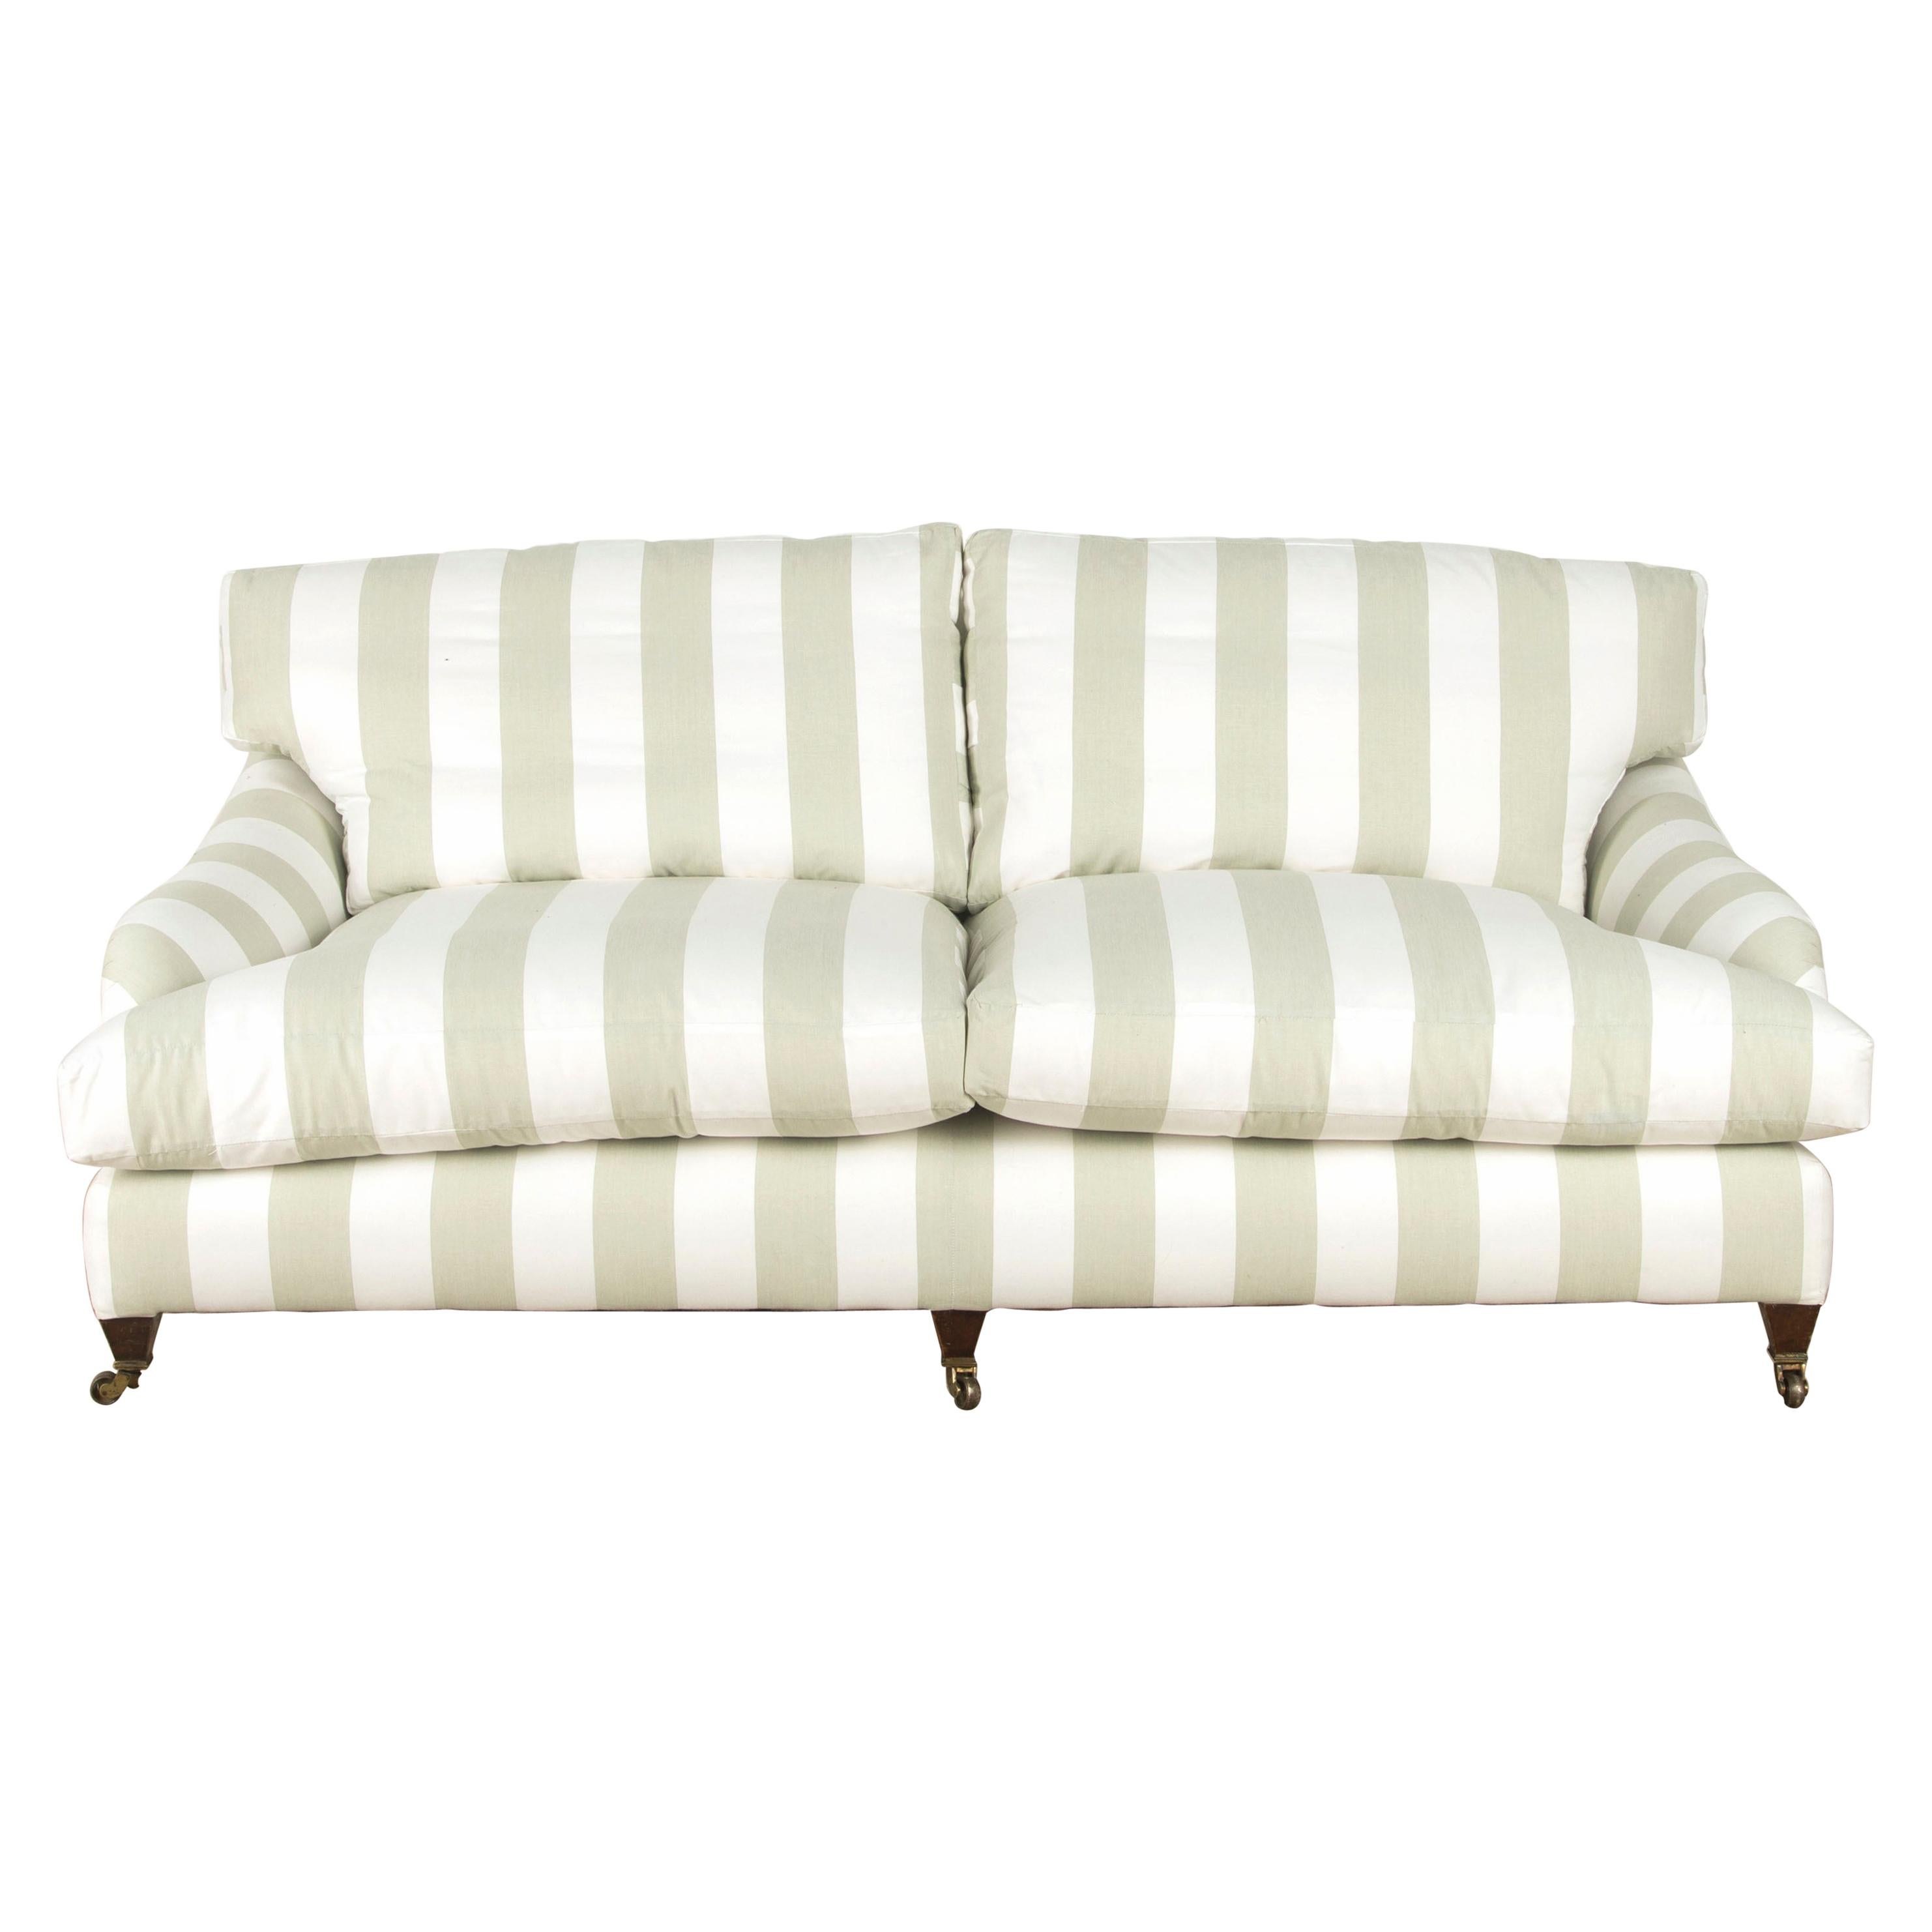 Late 19th Century English Howard Style Sofa